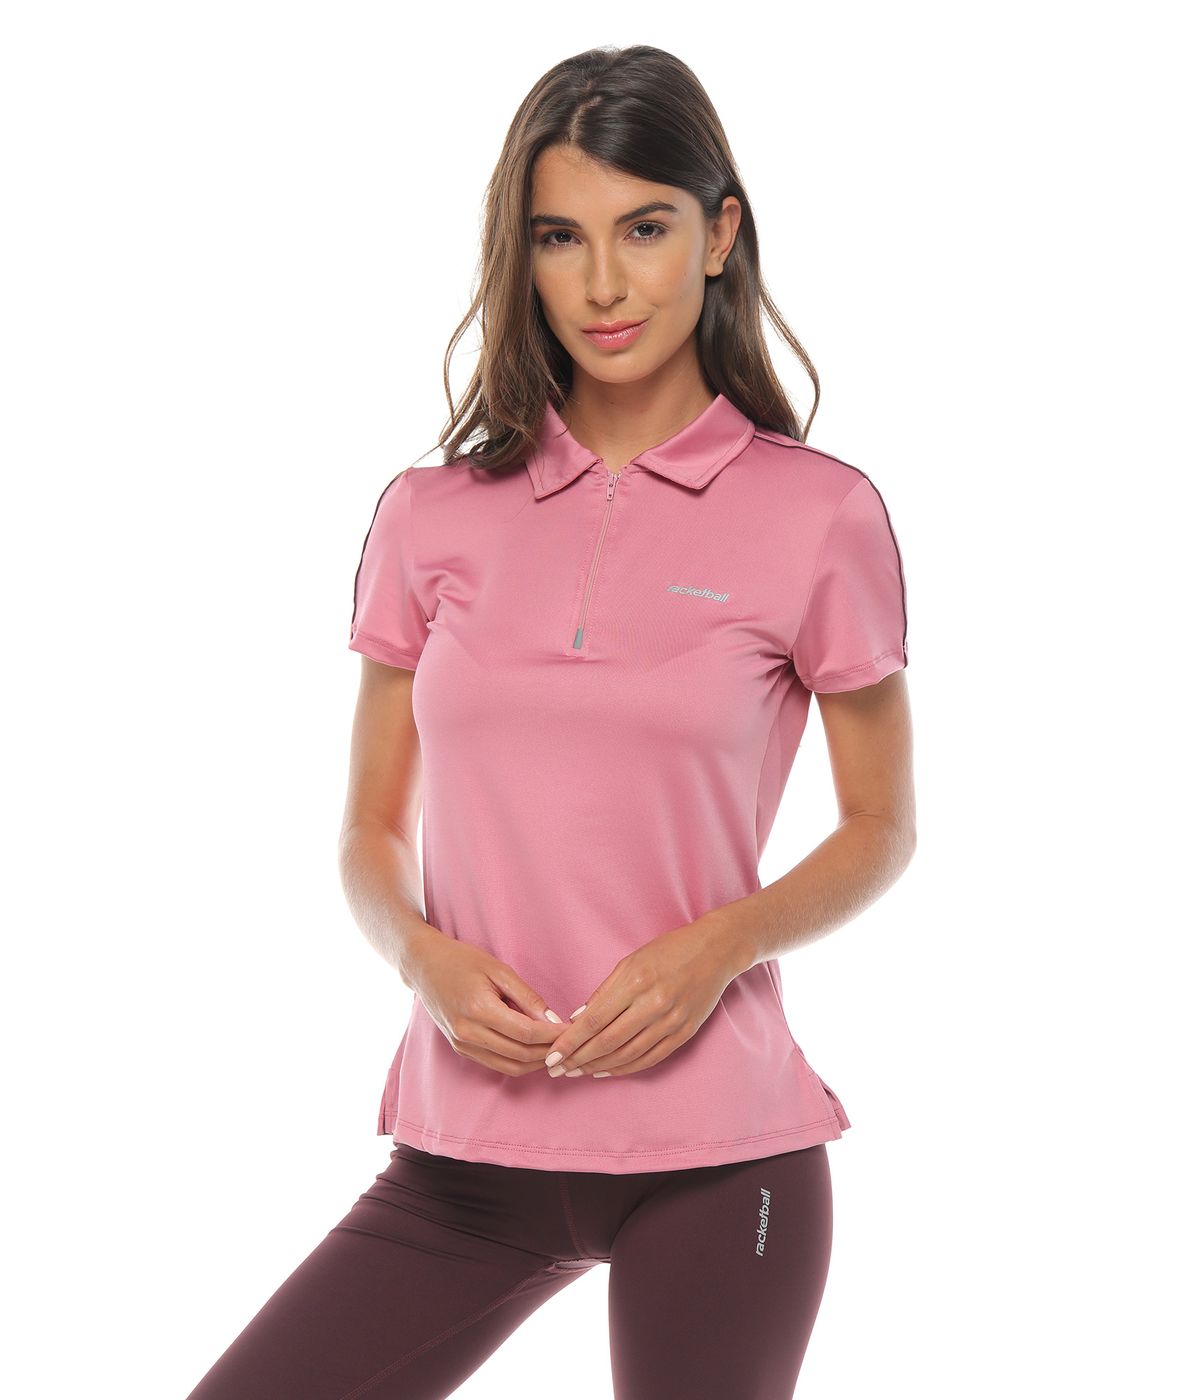 Camiseta polo de color rosa/berenjena - racketball movil